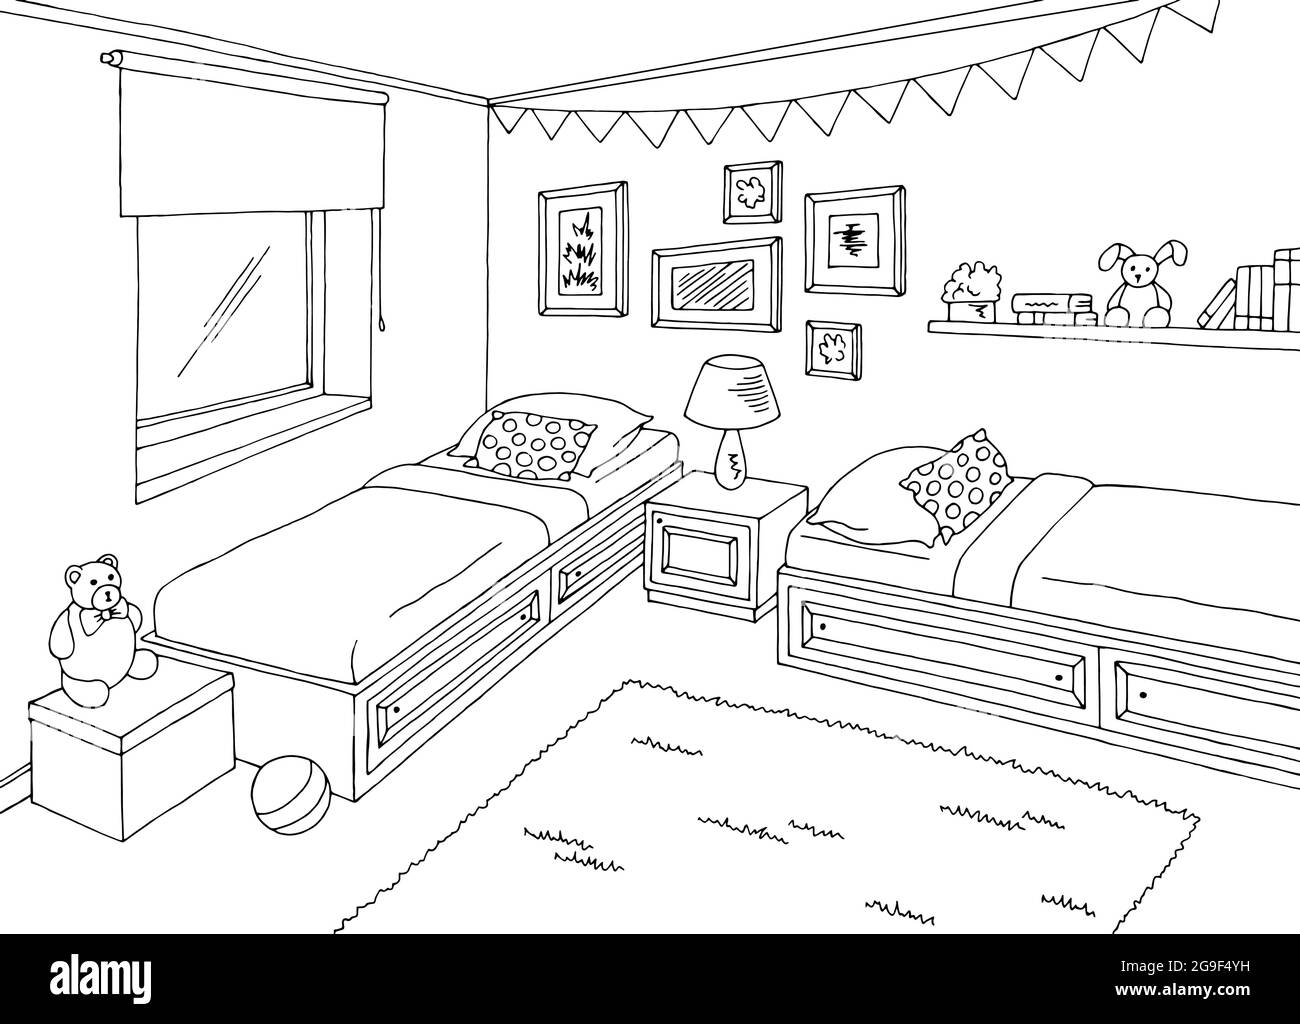 Kinder Zimmer Grafik schwarz weiß zwei Bett Haus Innenraum Skizze Illustration Vektor Stock Vektor